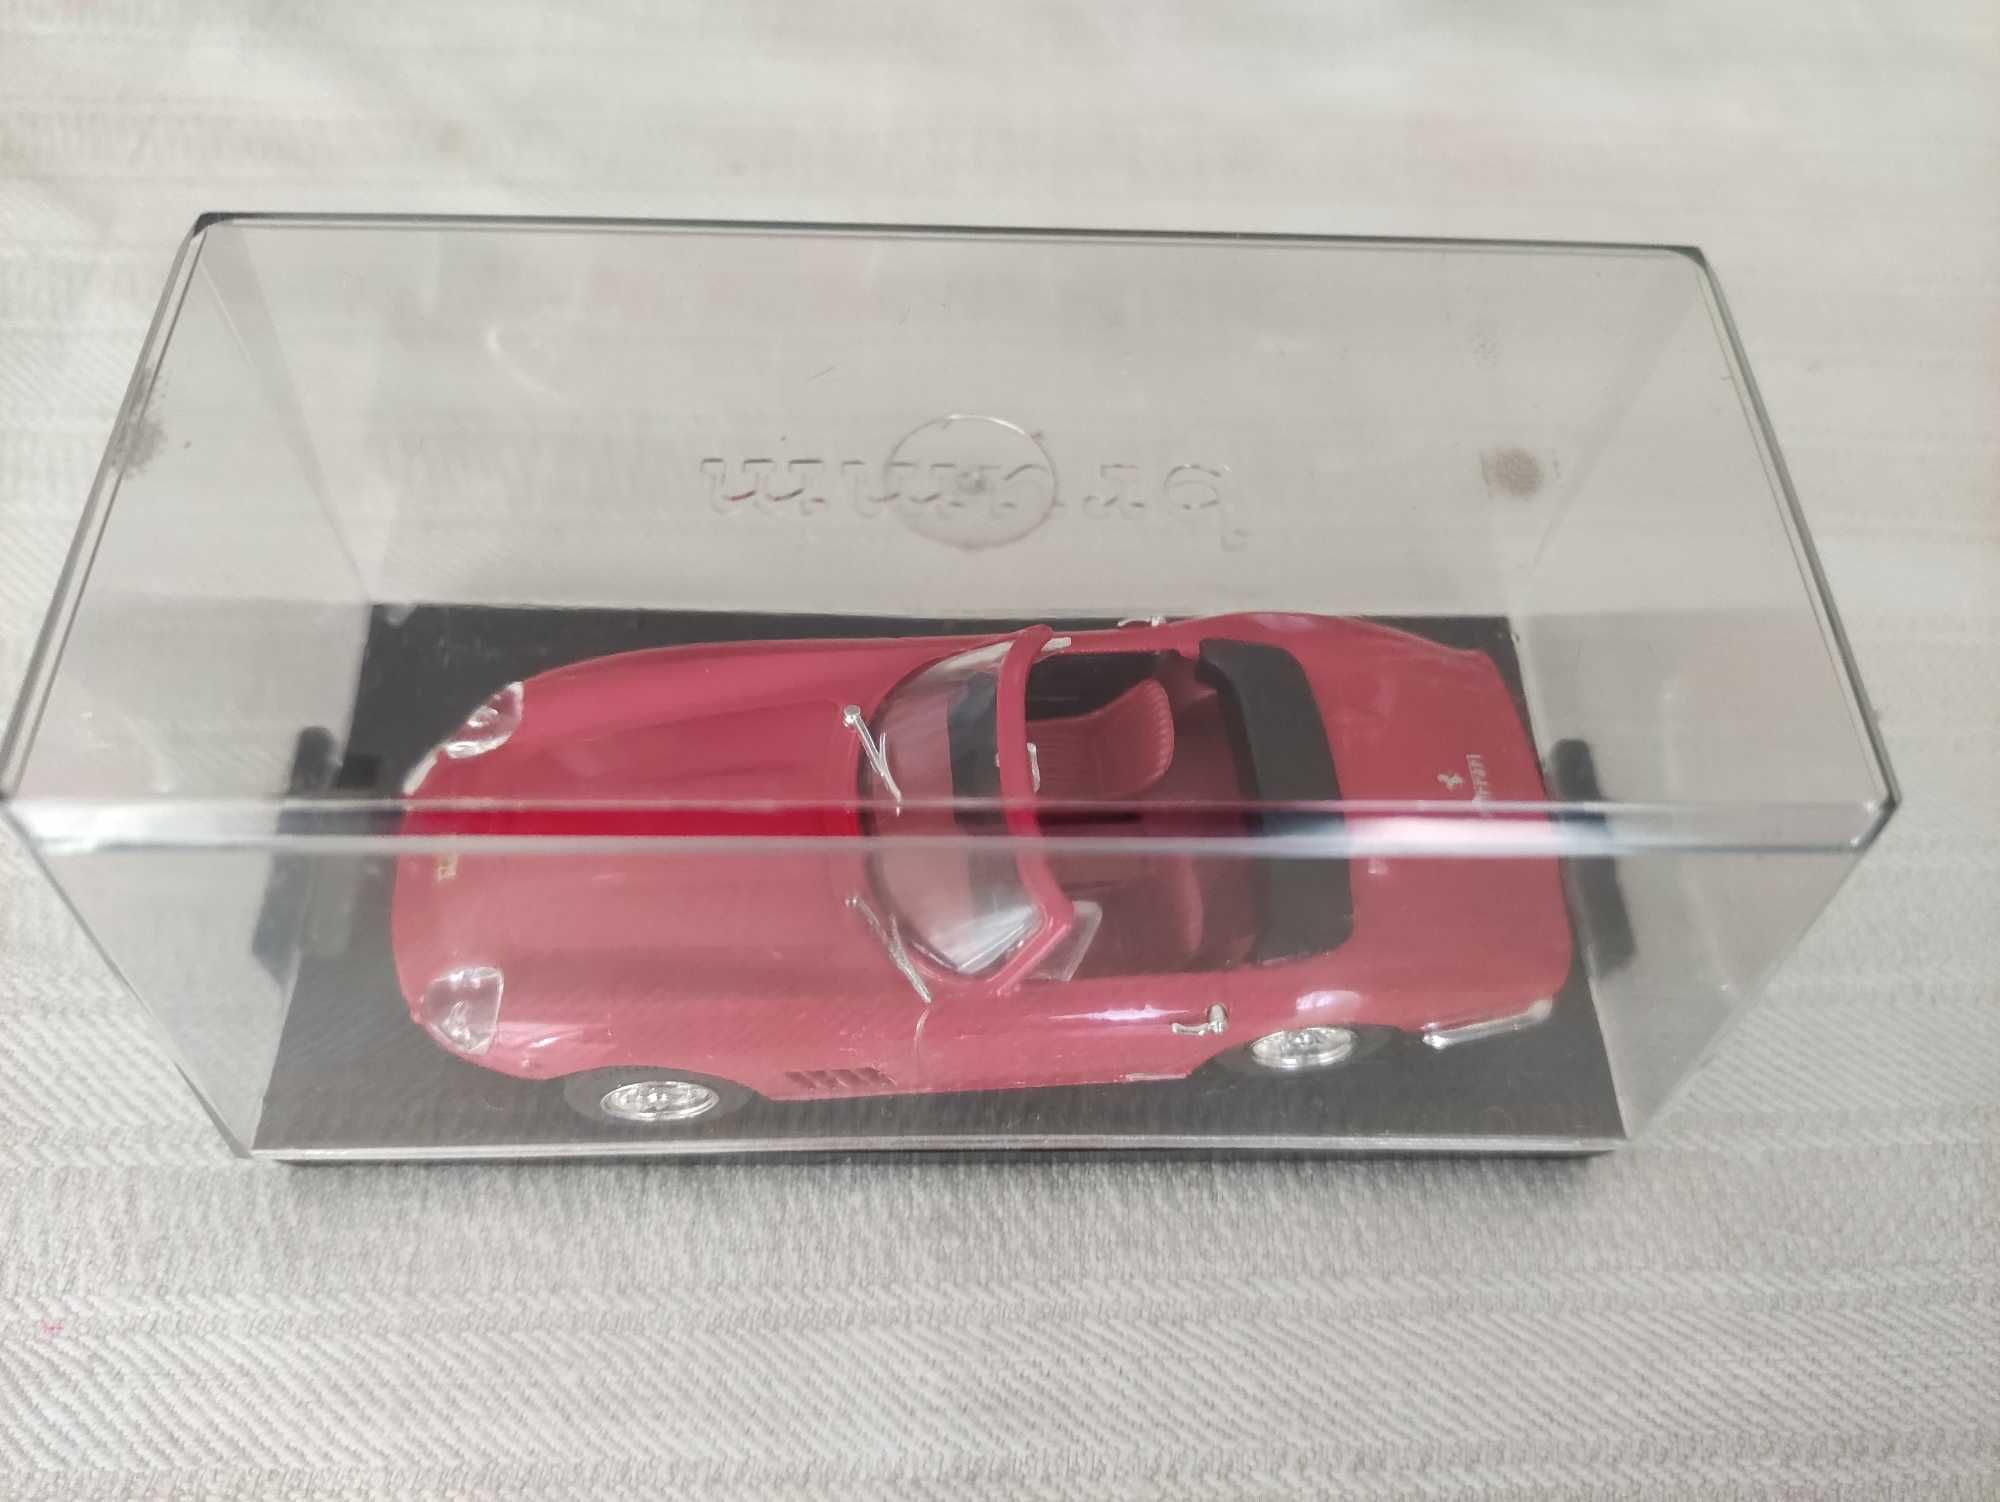 Vendo miniatura Ferrari, na escala 1:43,
marca Brumm.